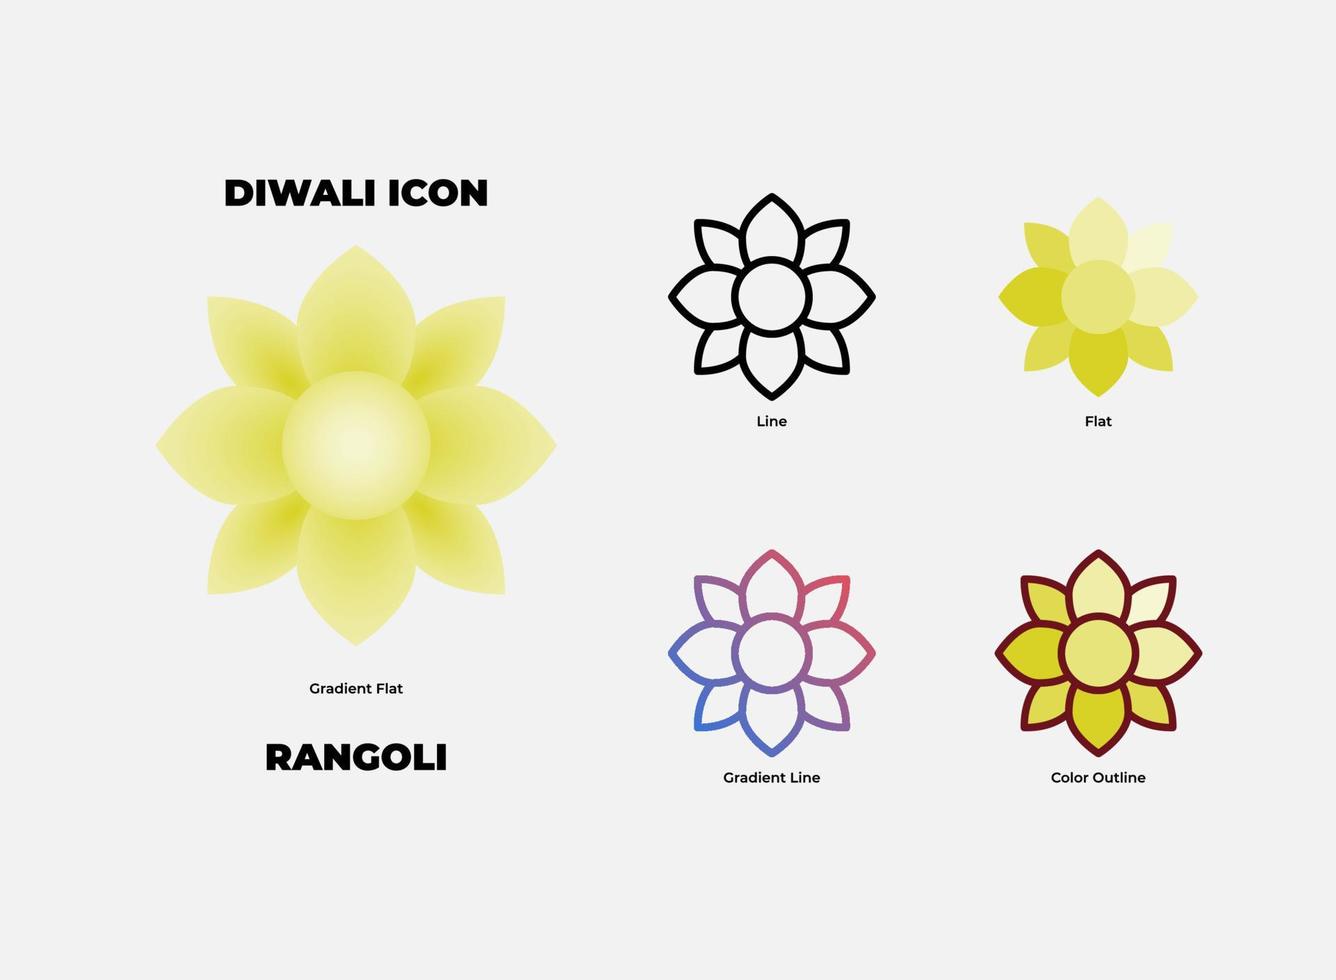 diwali rangoli ikonuppsättning vektor